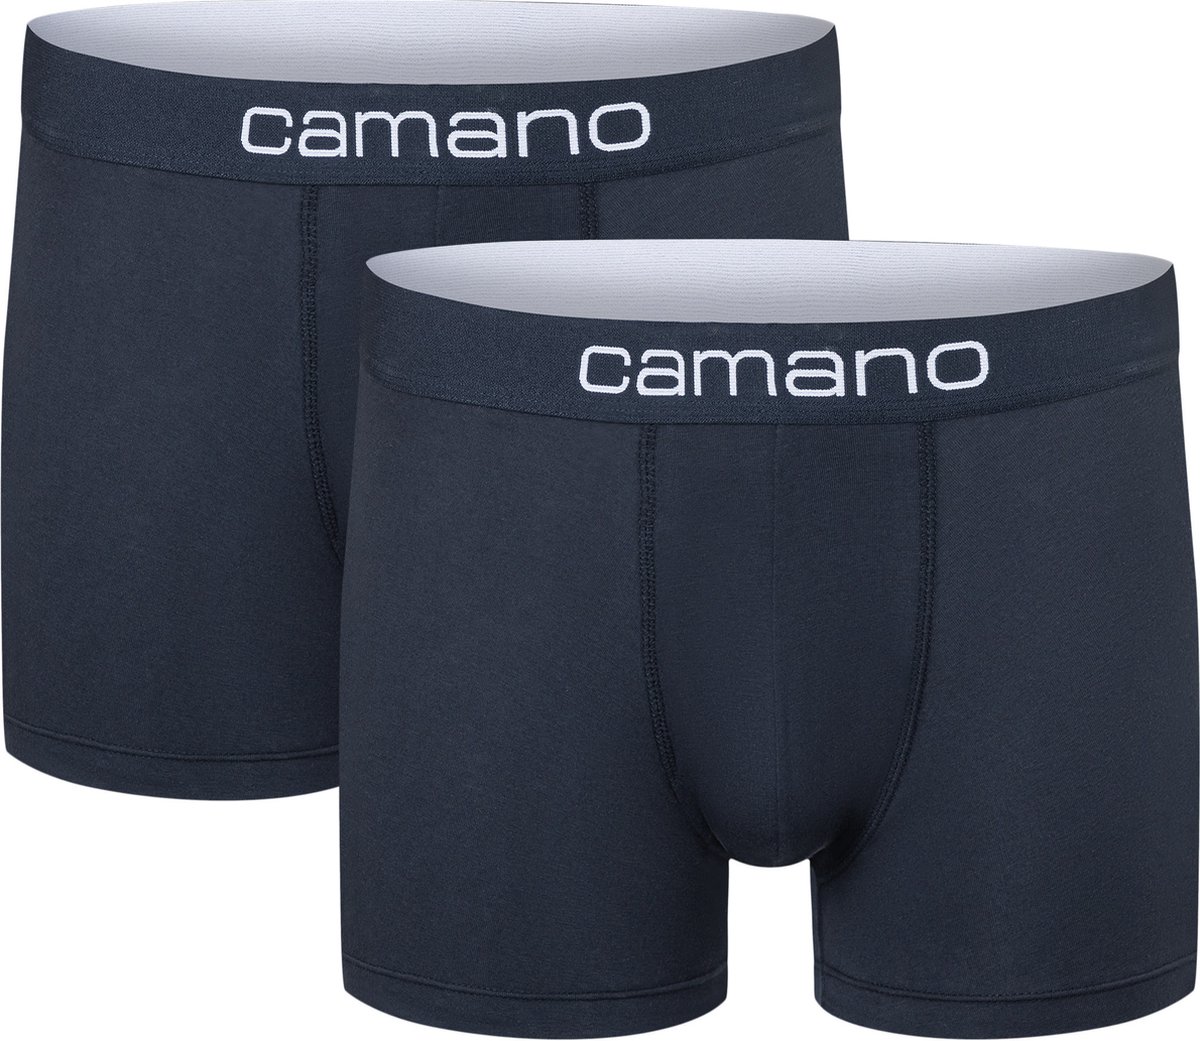 Camano - Boxershorts - High Comfort - Katoen - Stretch - Top Boxers - Navy Blauw - XL